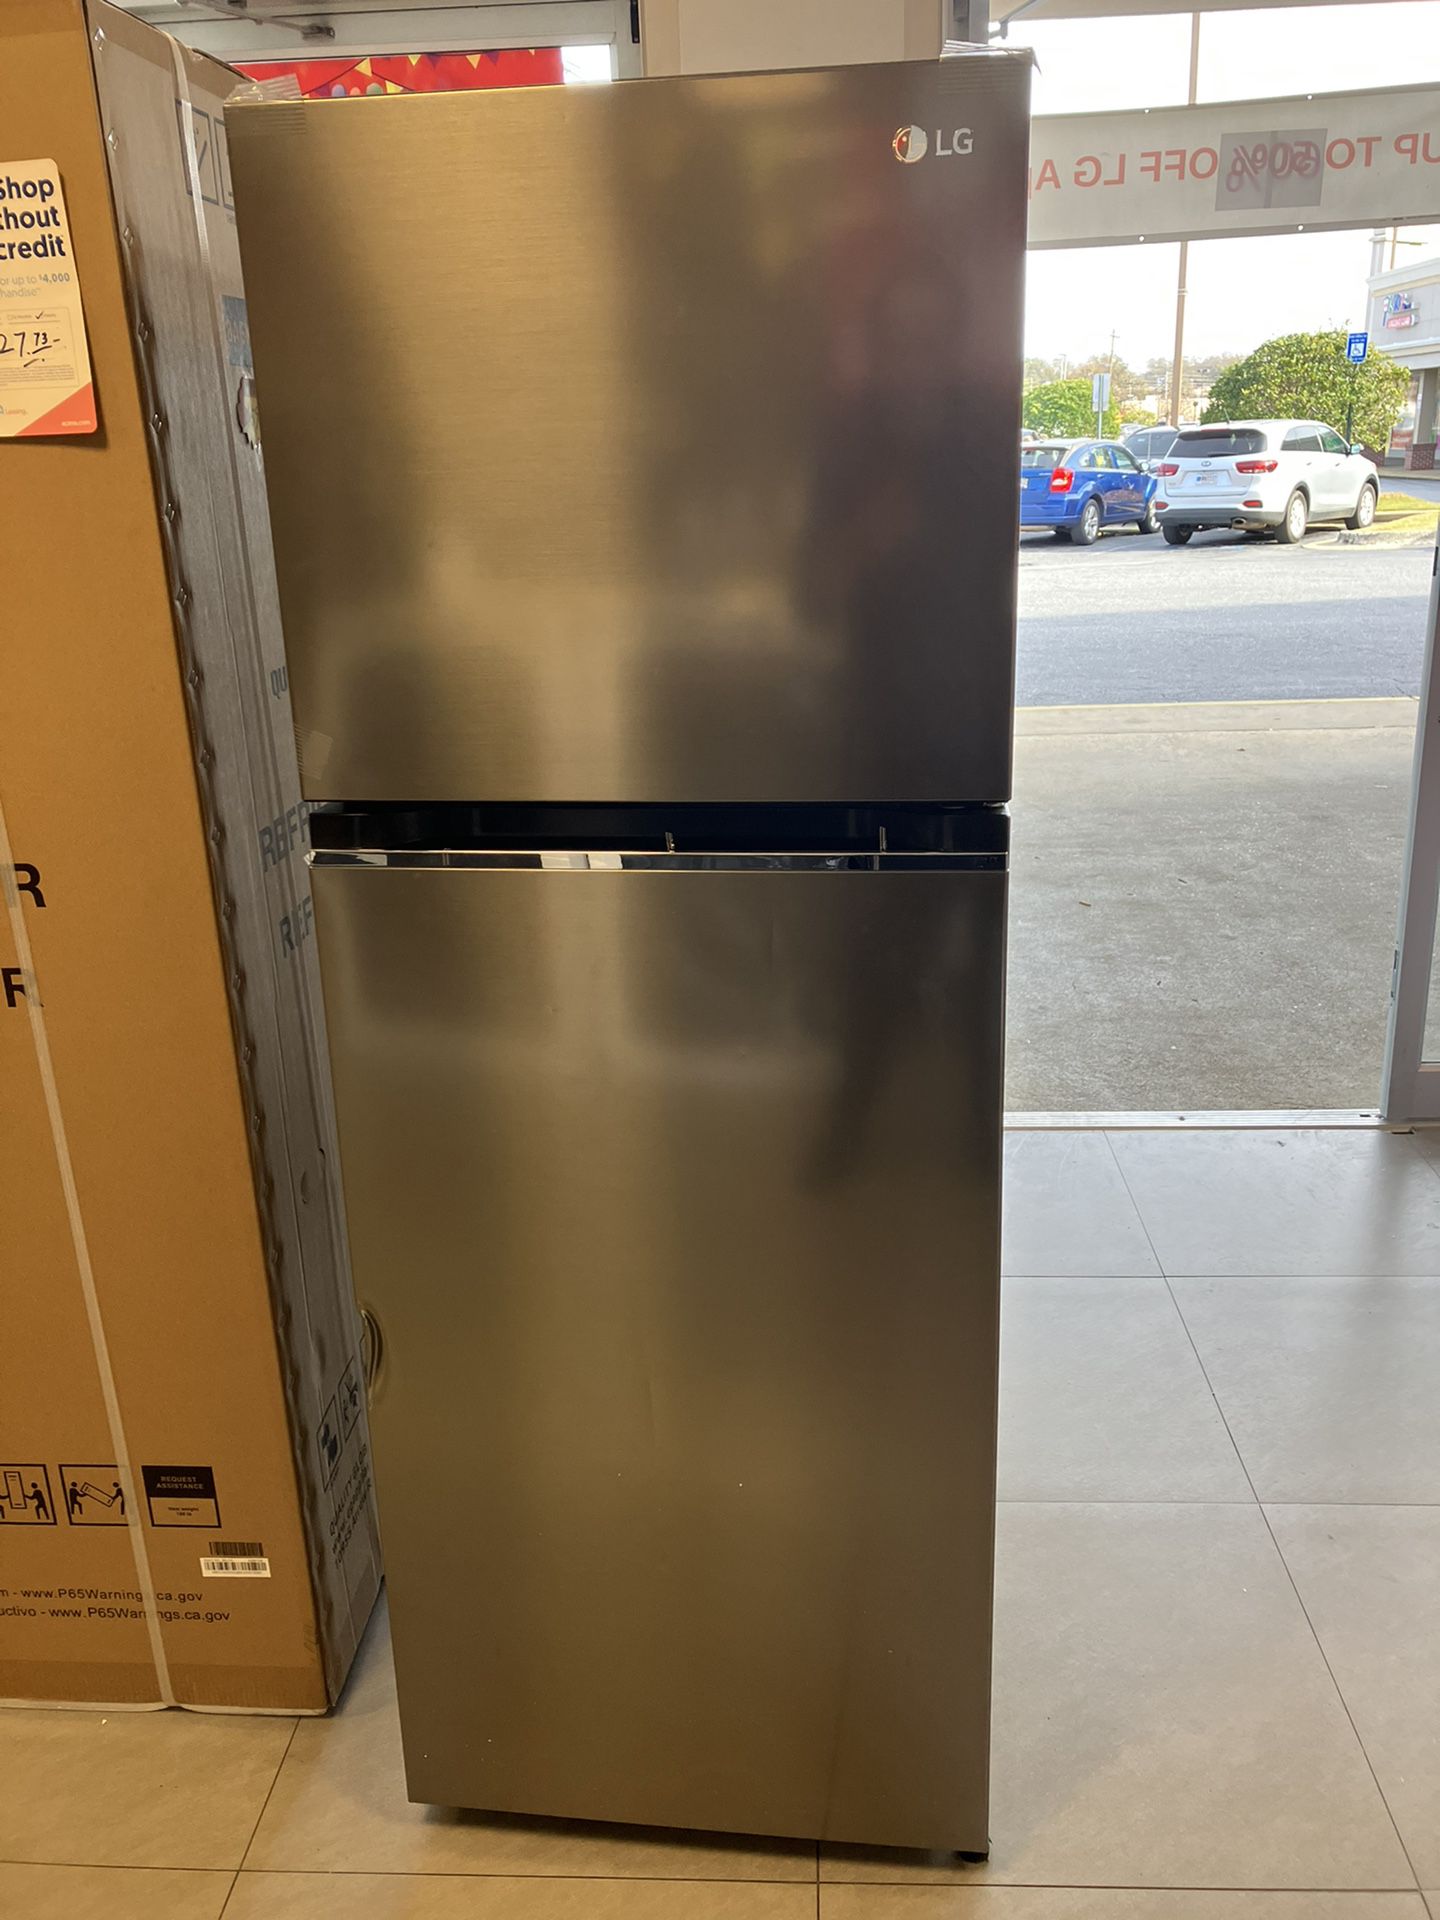 New LG Refrigerator